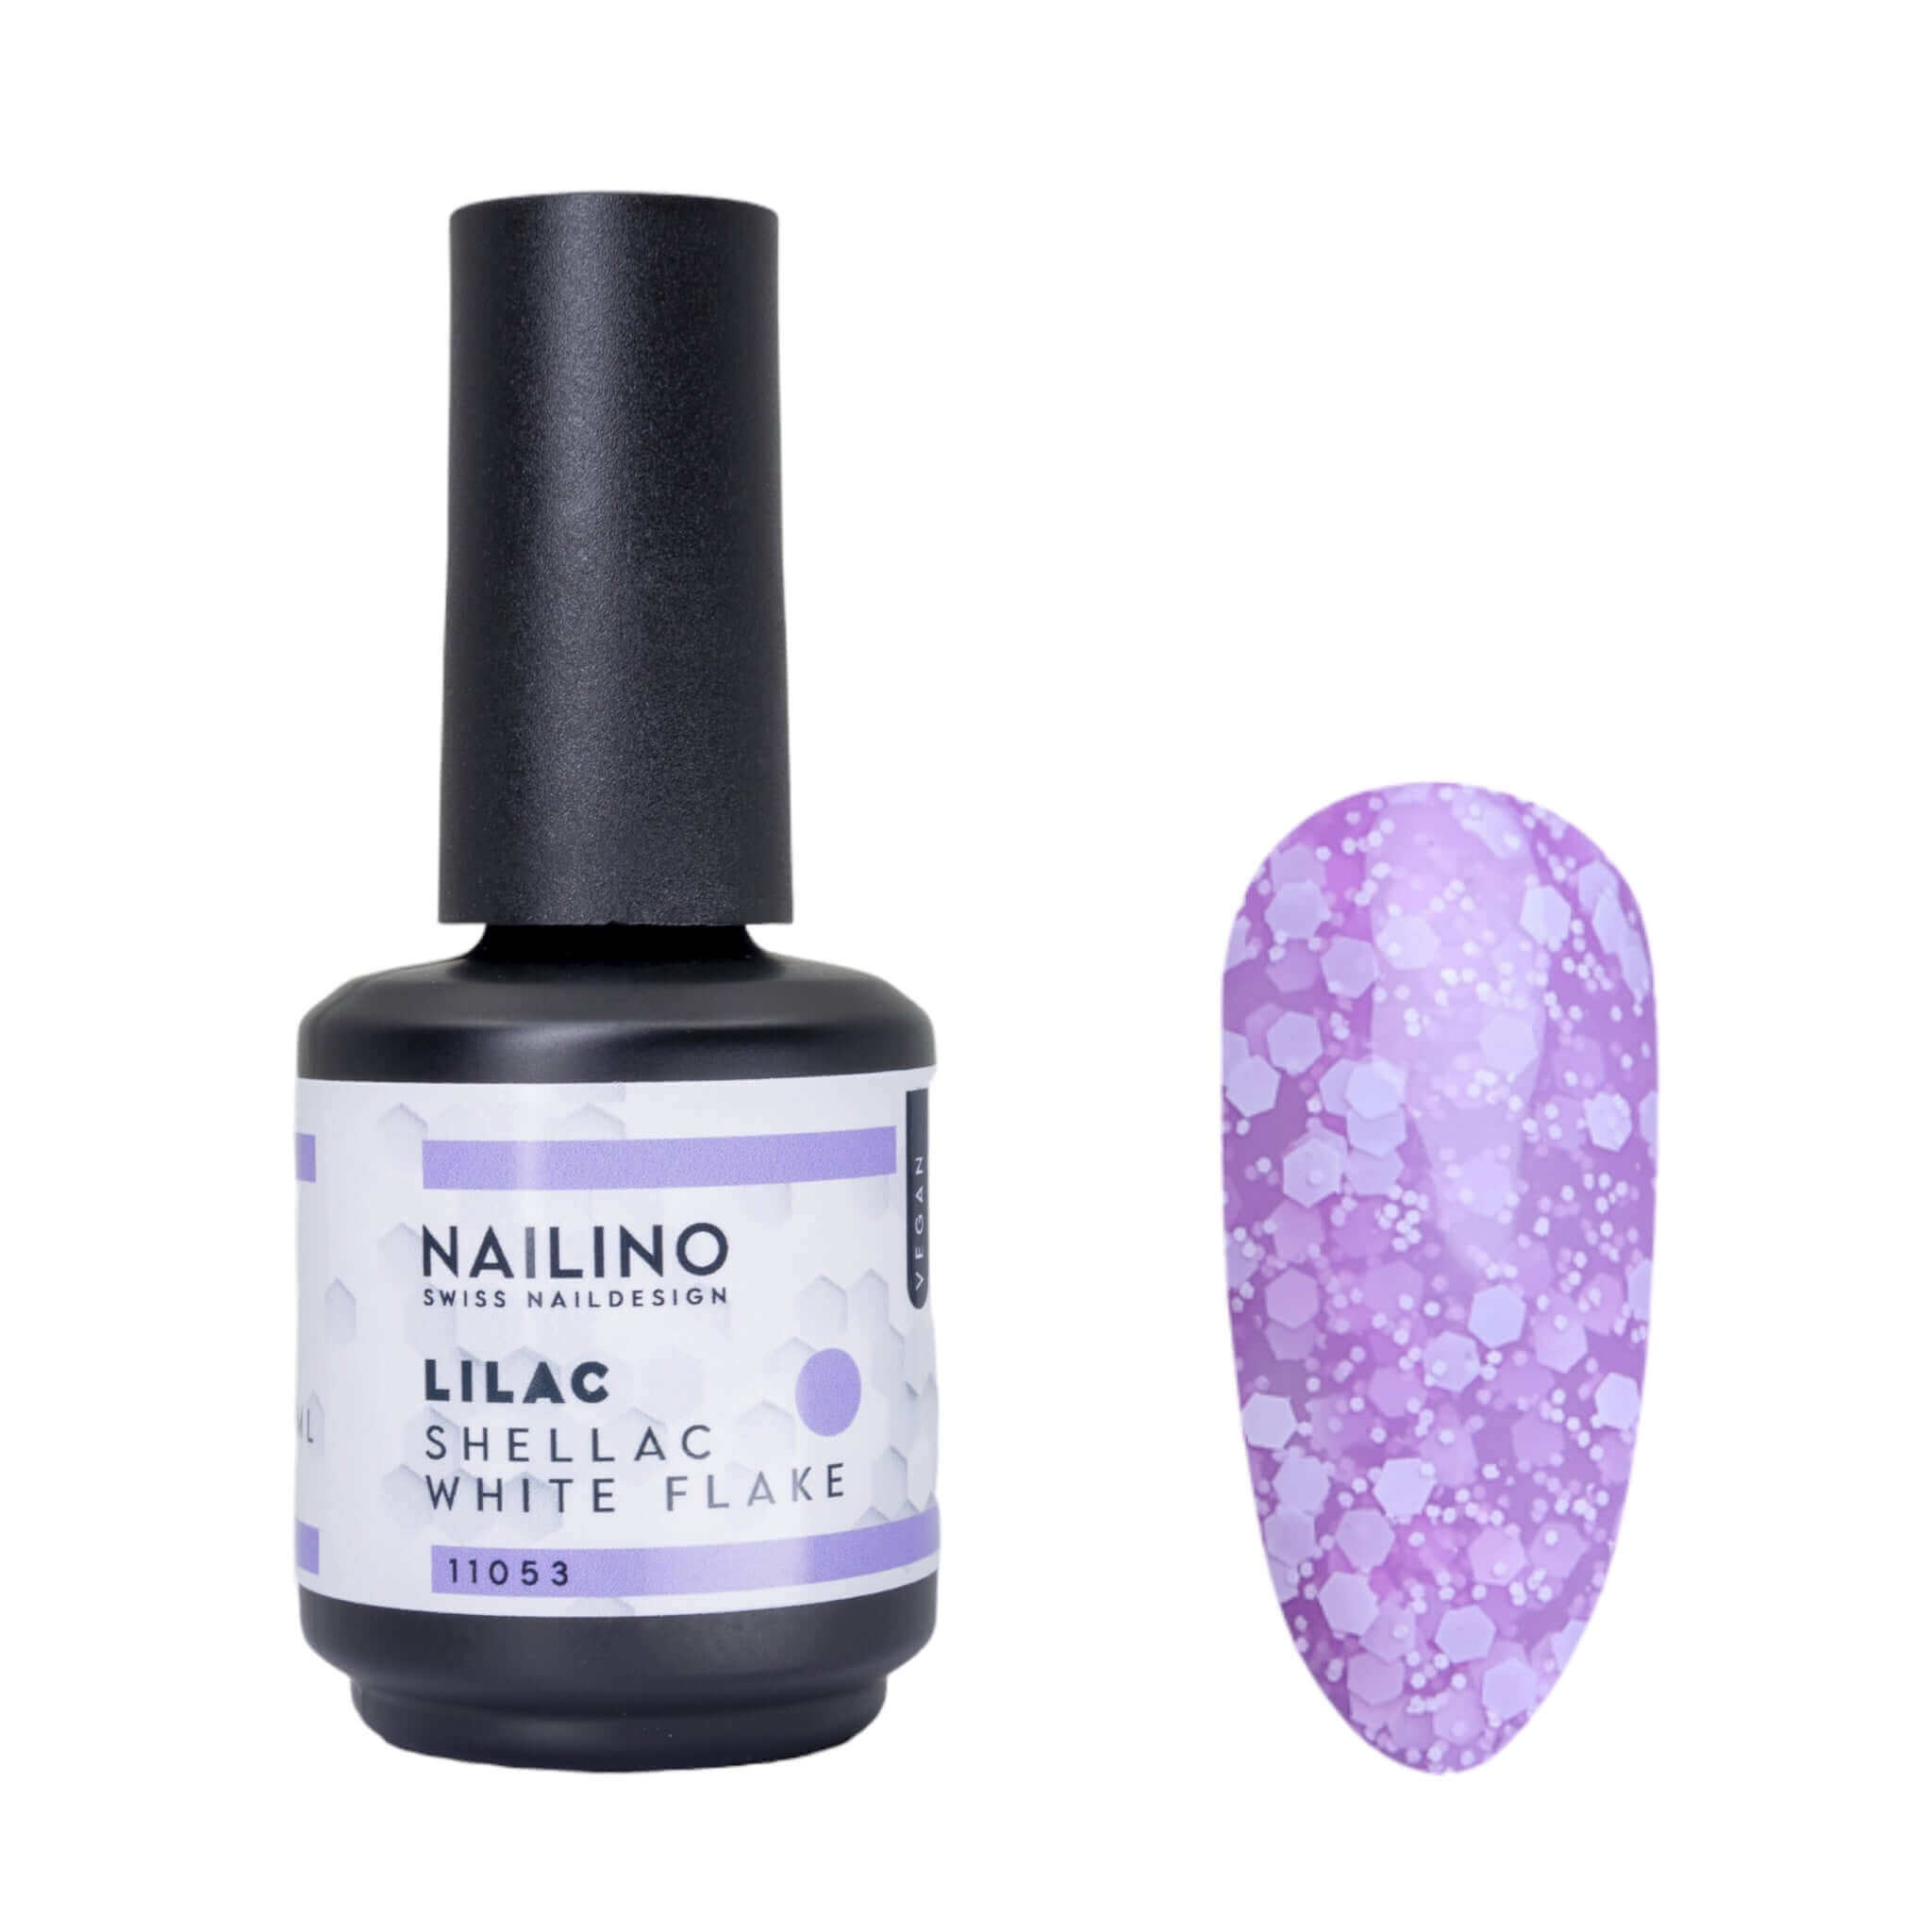 NAILINO Shellac White Flake Lilac -